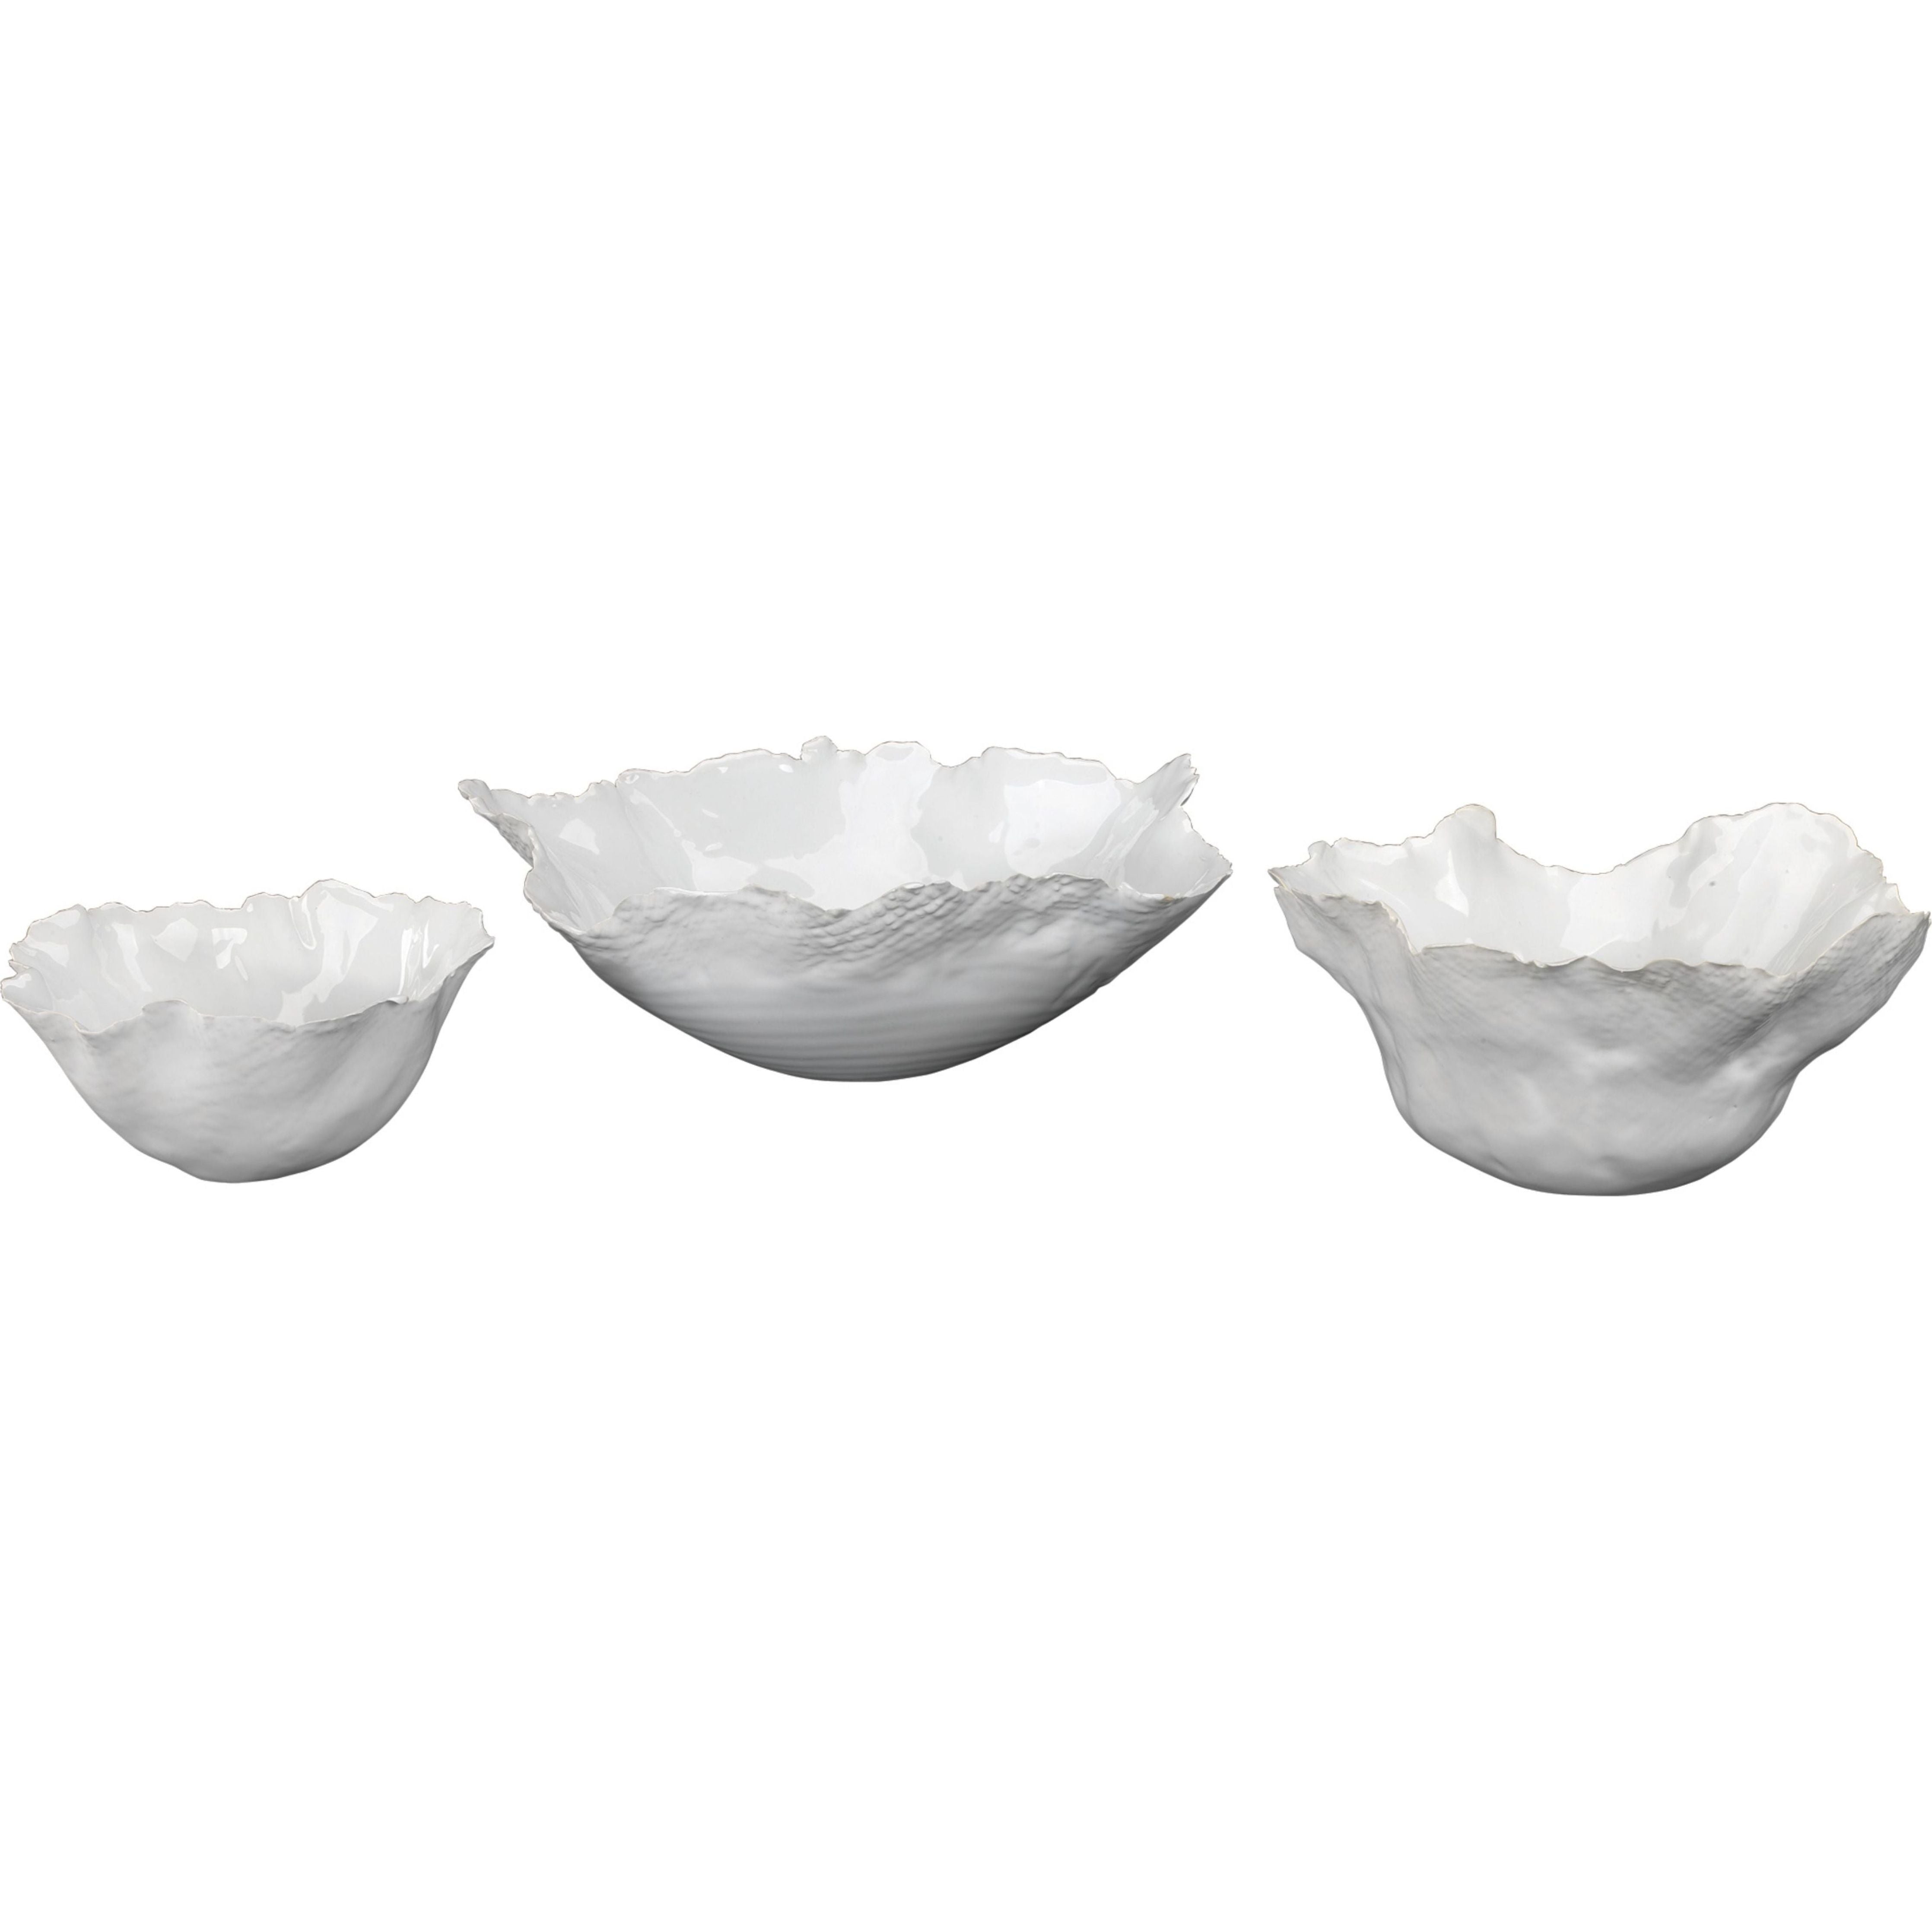 Jamie Young Company - 7FLEU-BOWH - Fleur Ceramic Bowls (set of 3) - Fleur - White